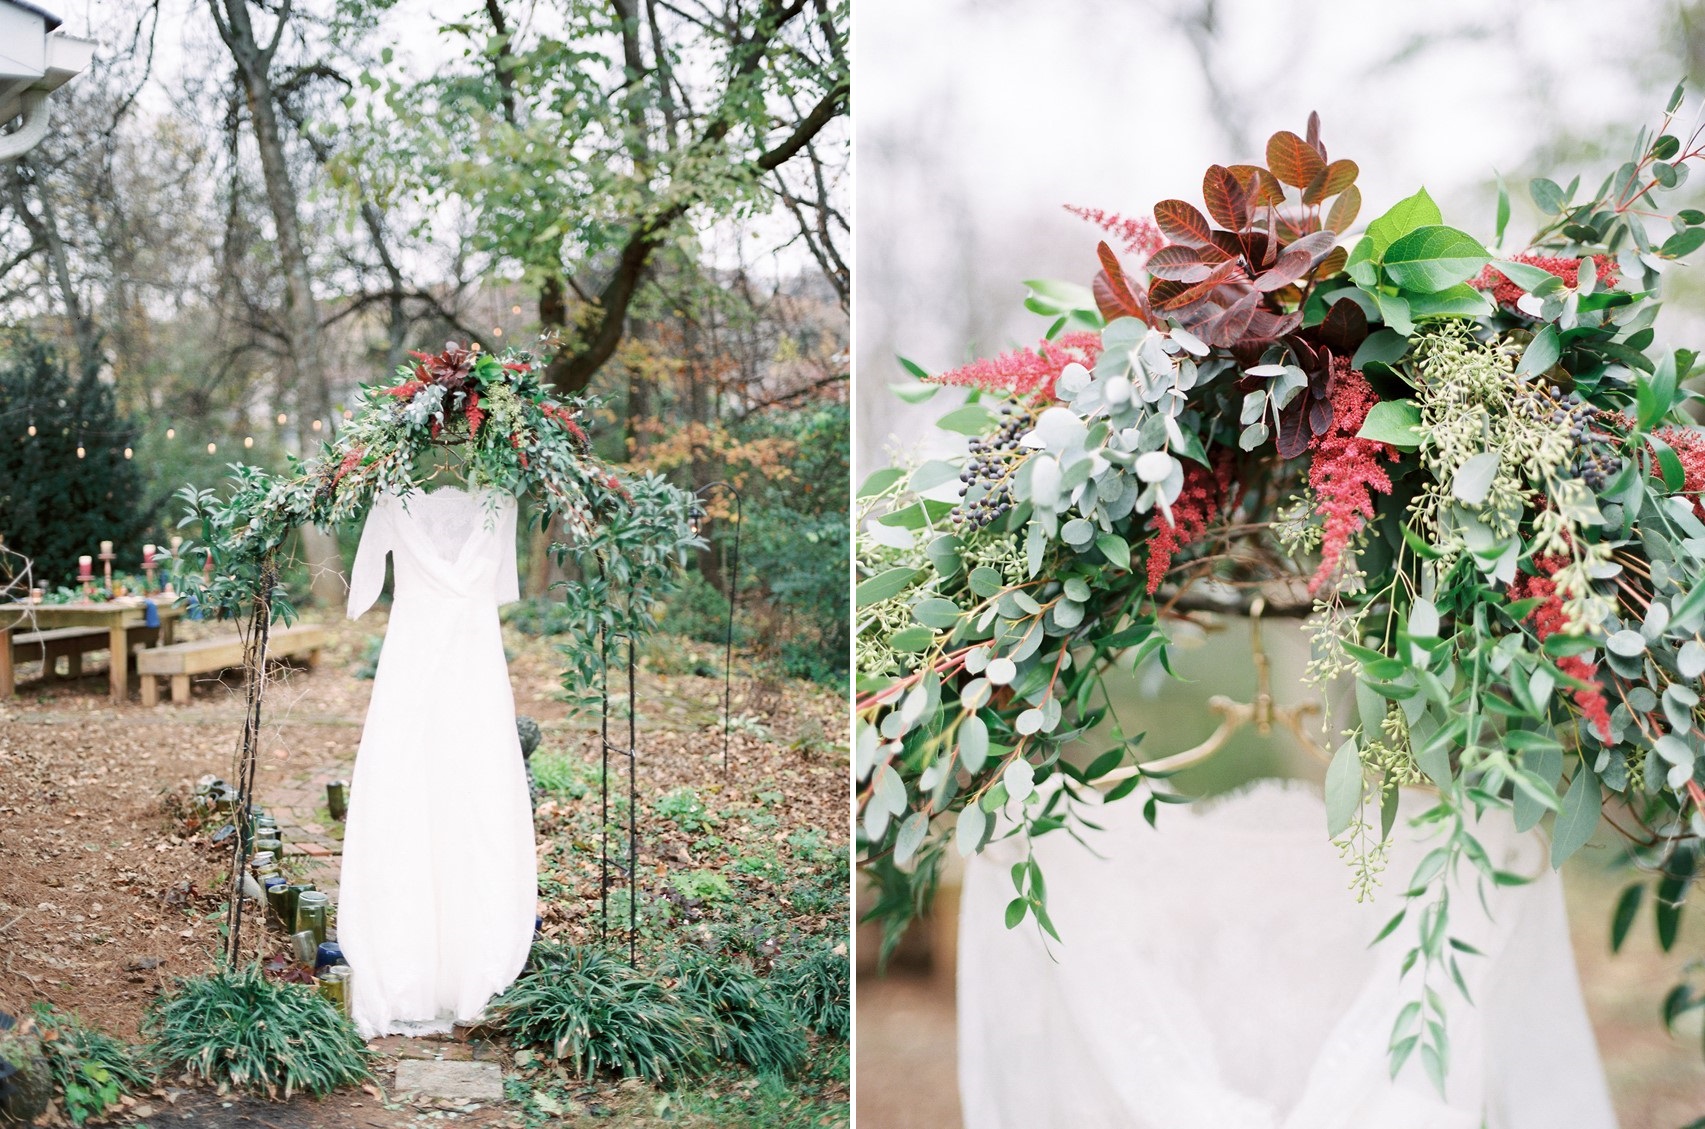 Winter Wedding Dress & Floral Arch